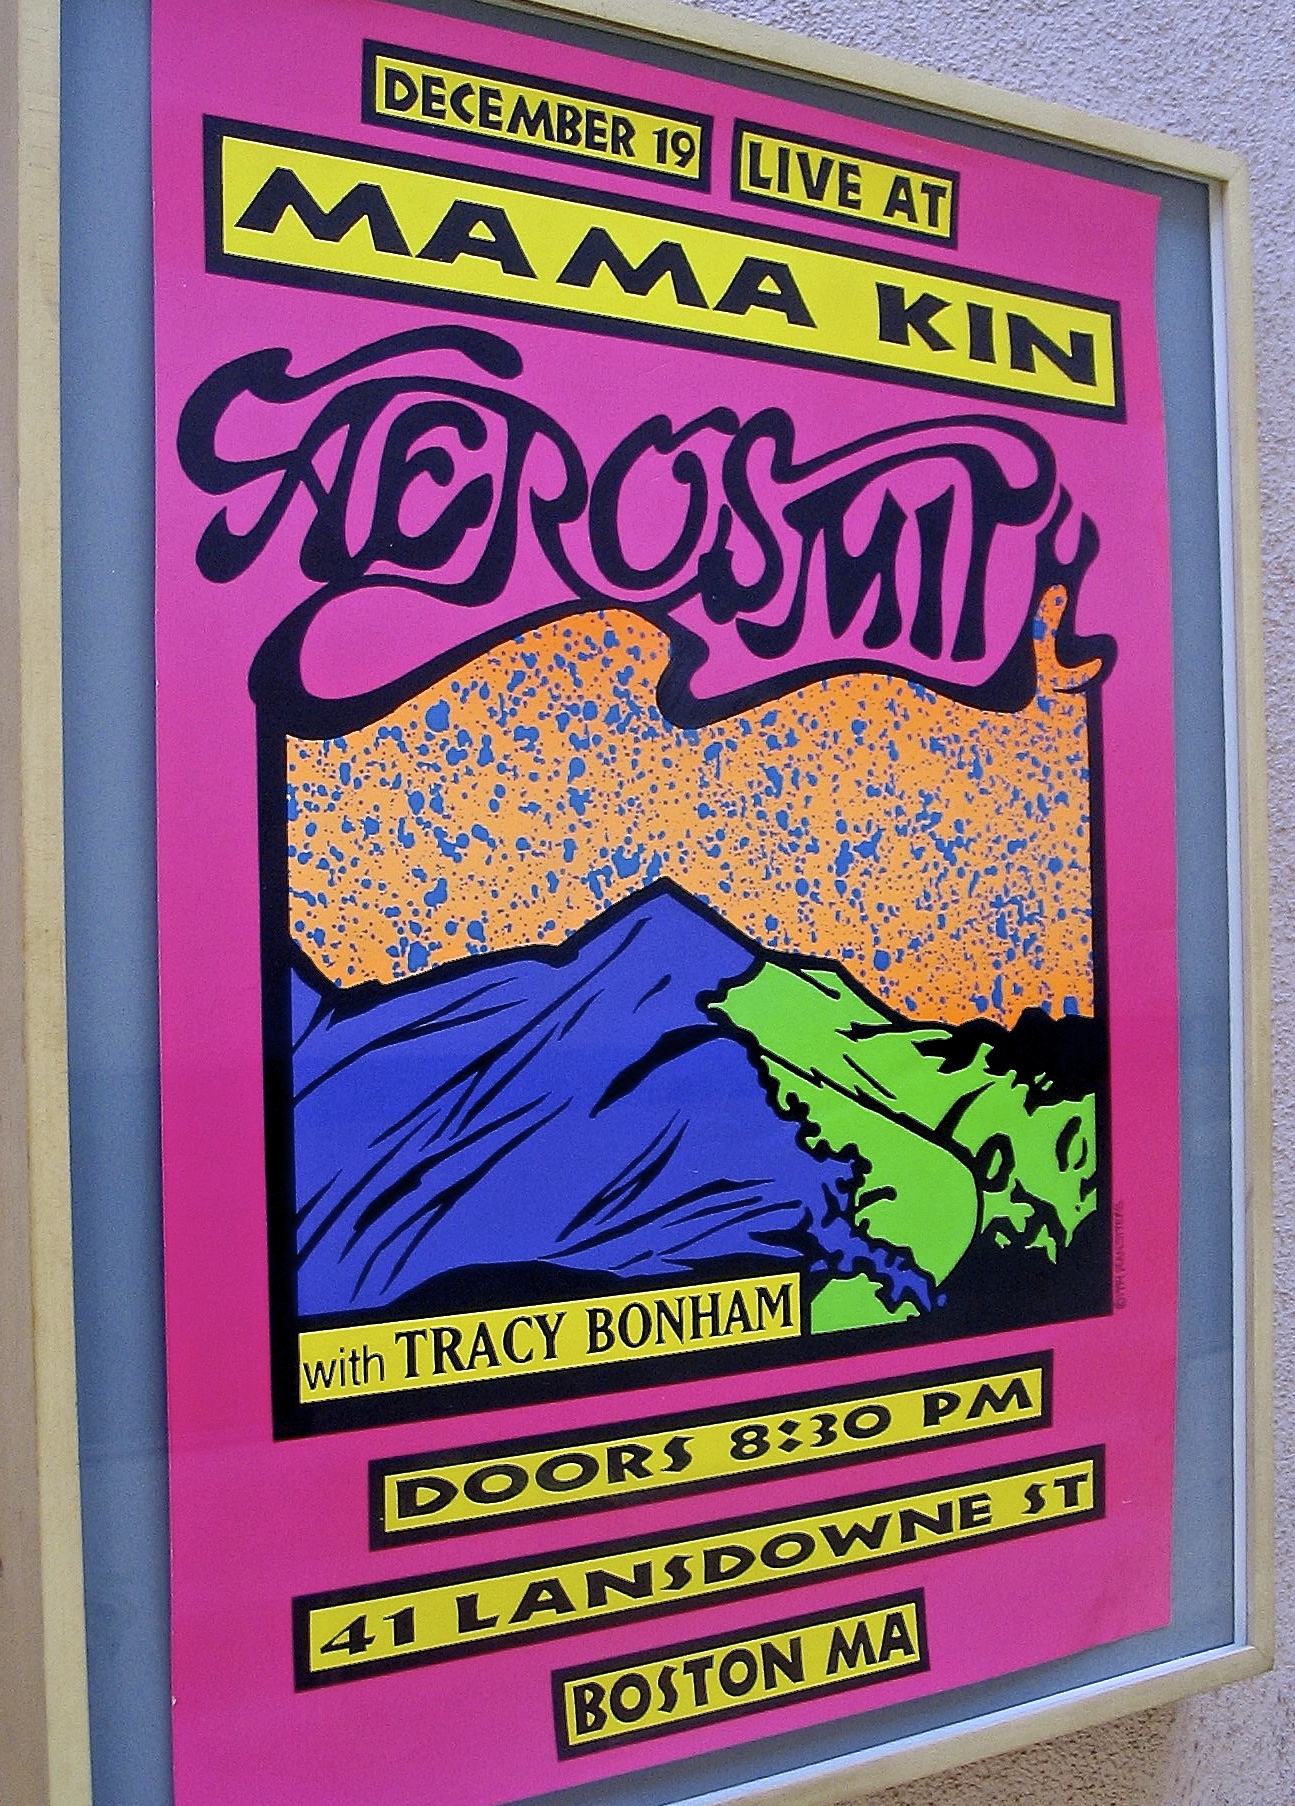 Old Aerosmith poster design.